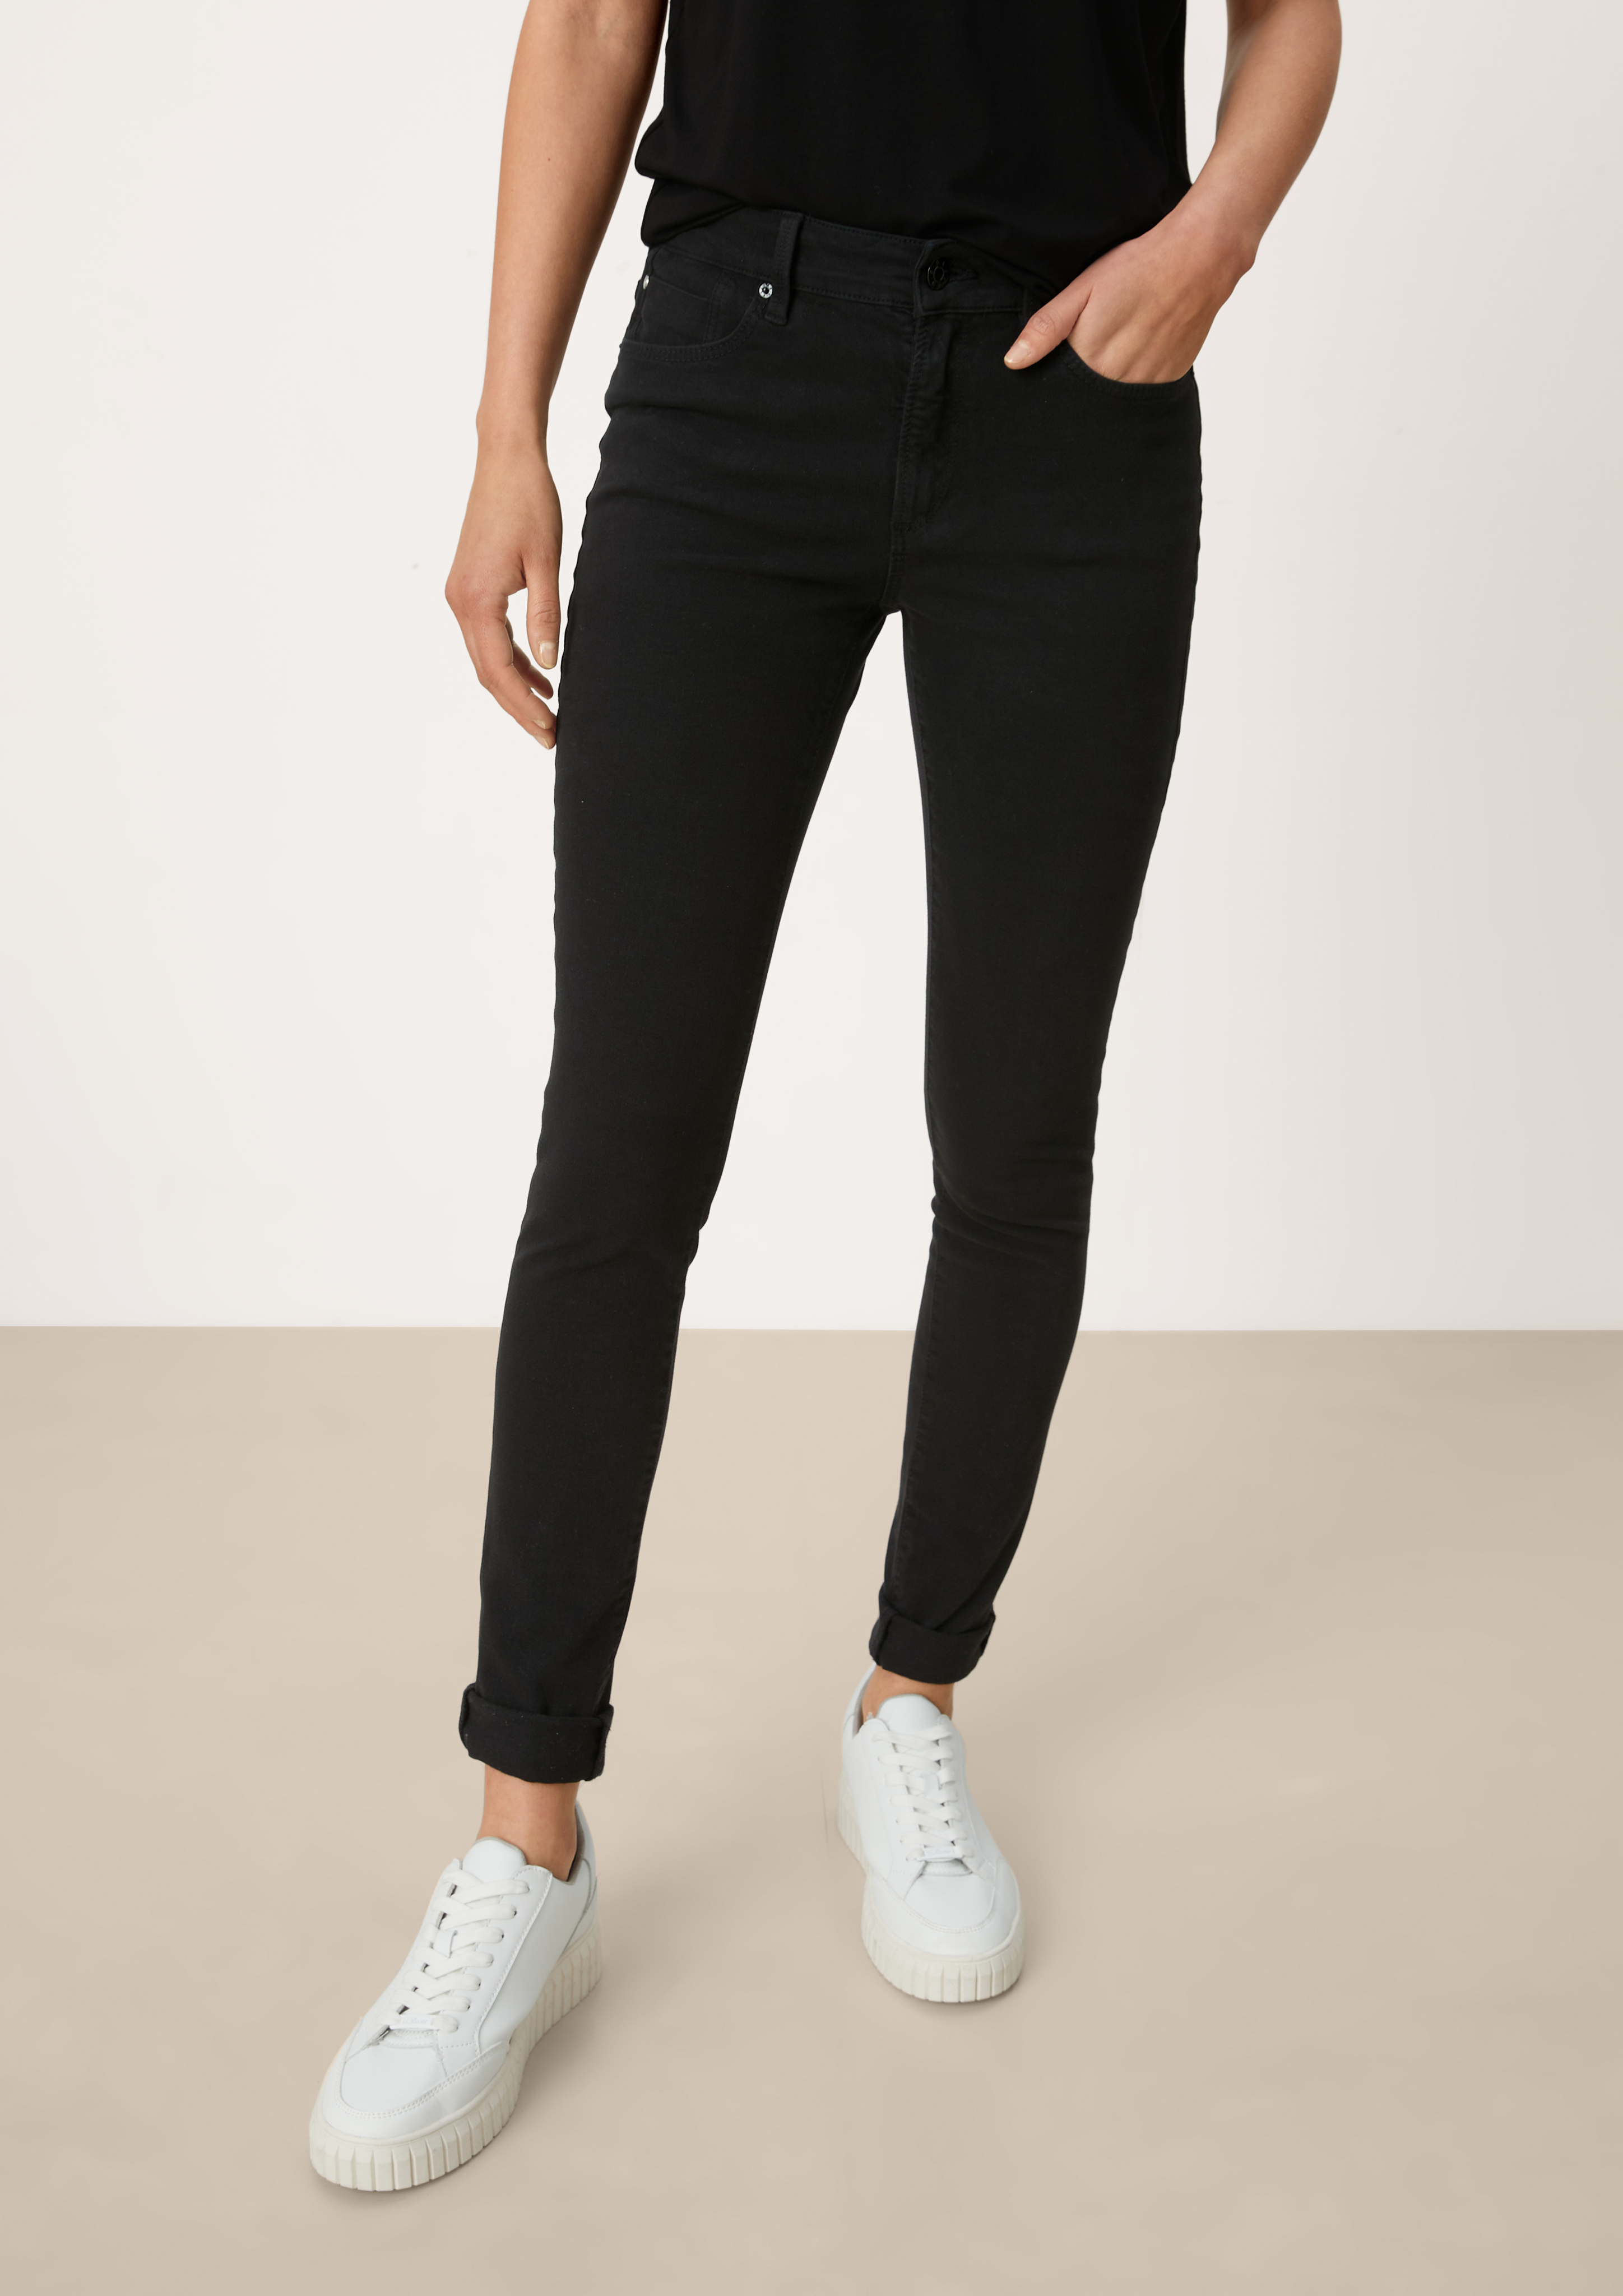 Izabell jeans / skinny skinny fit leg rise mid - / black 